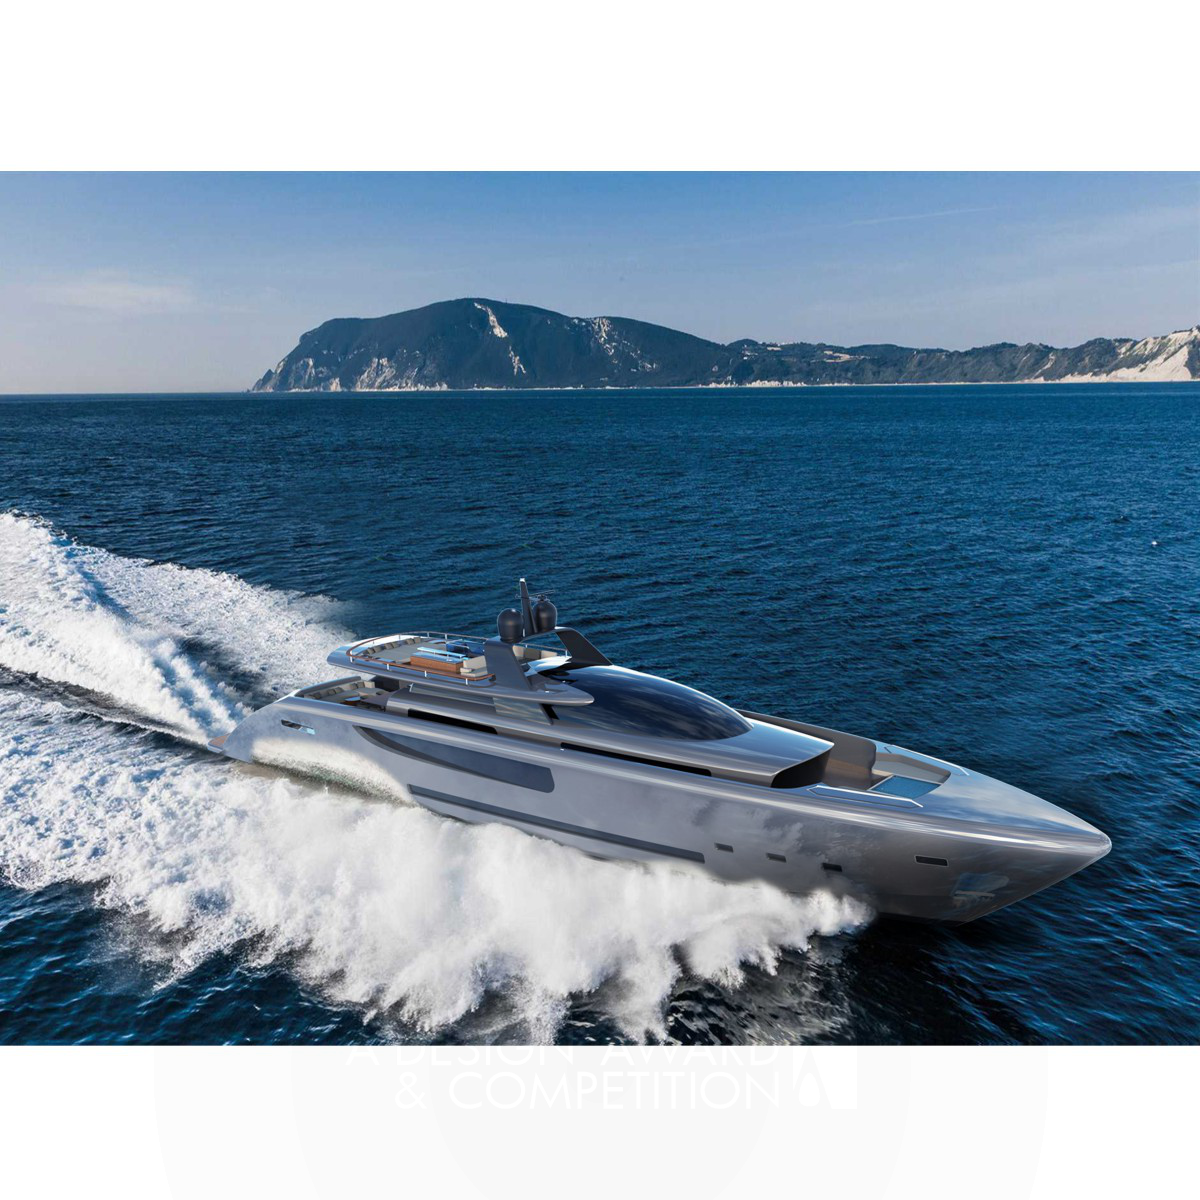 SiVola <b>35 mt motor yacht